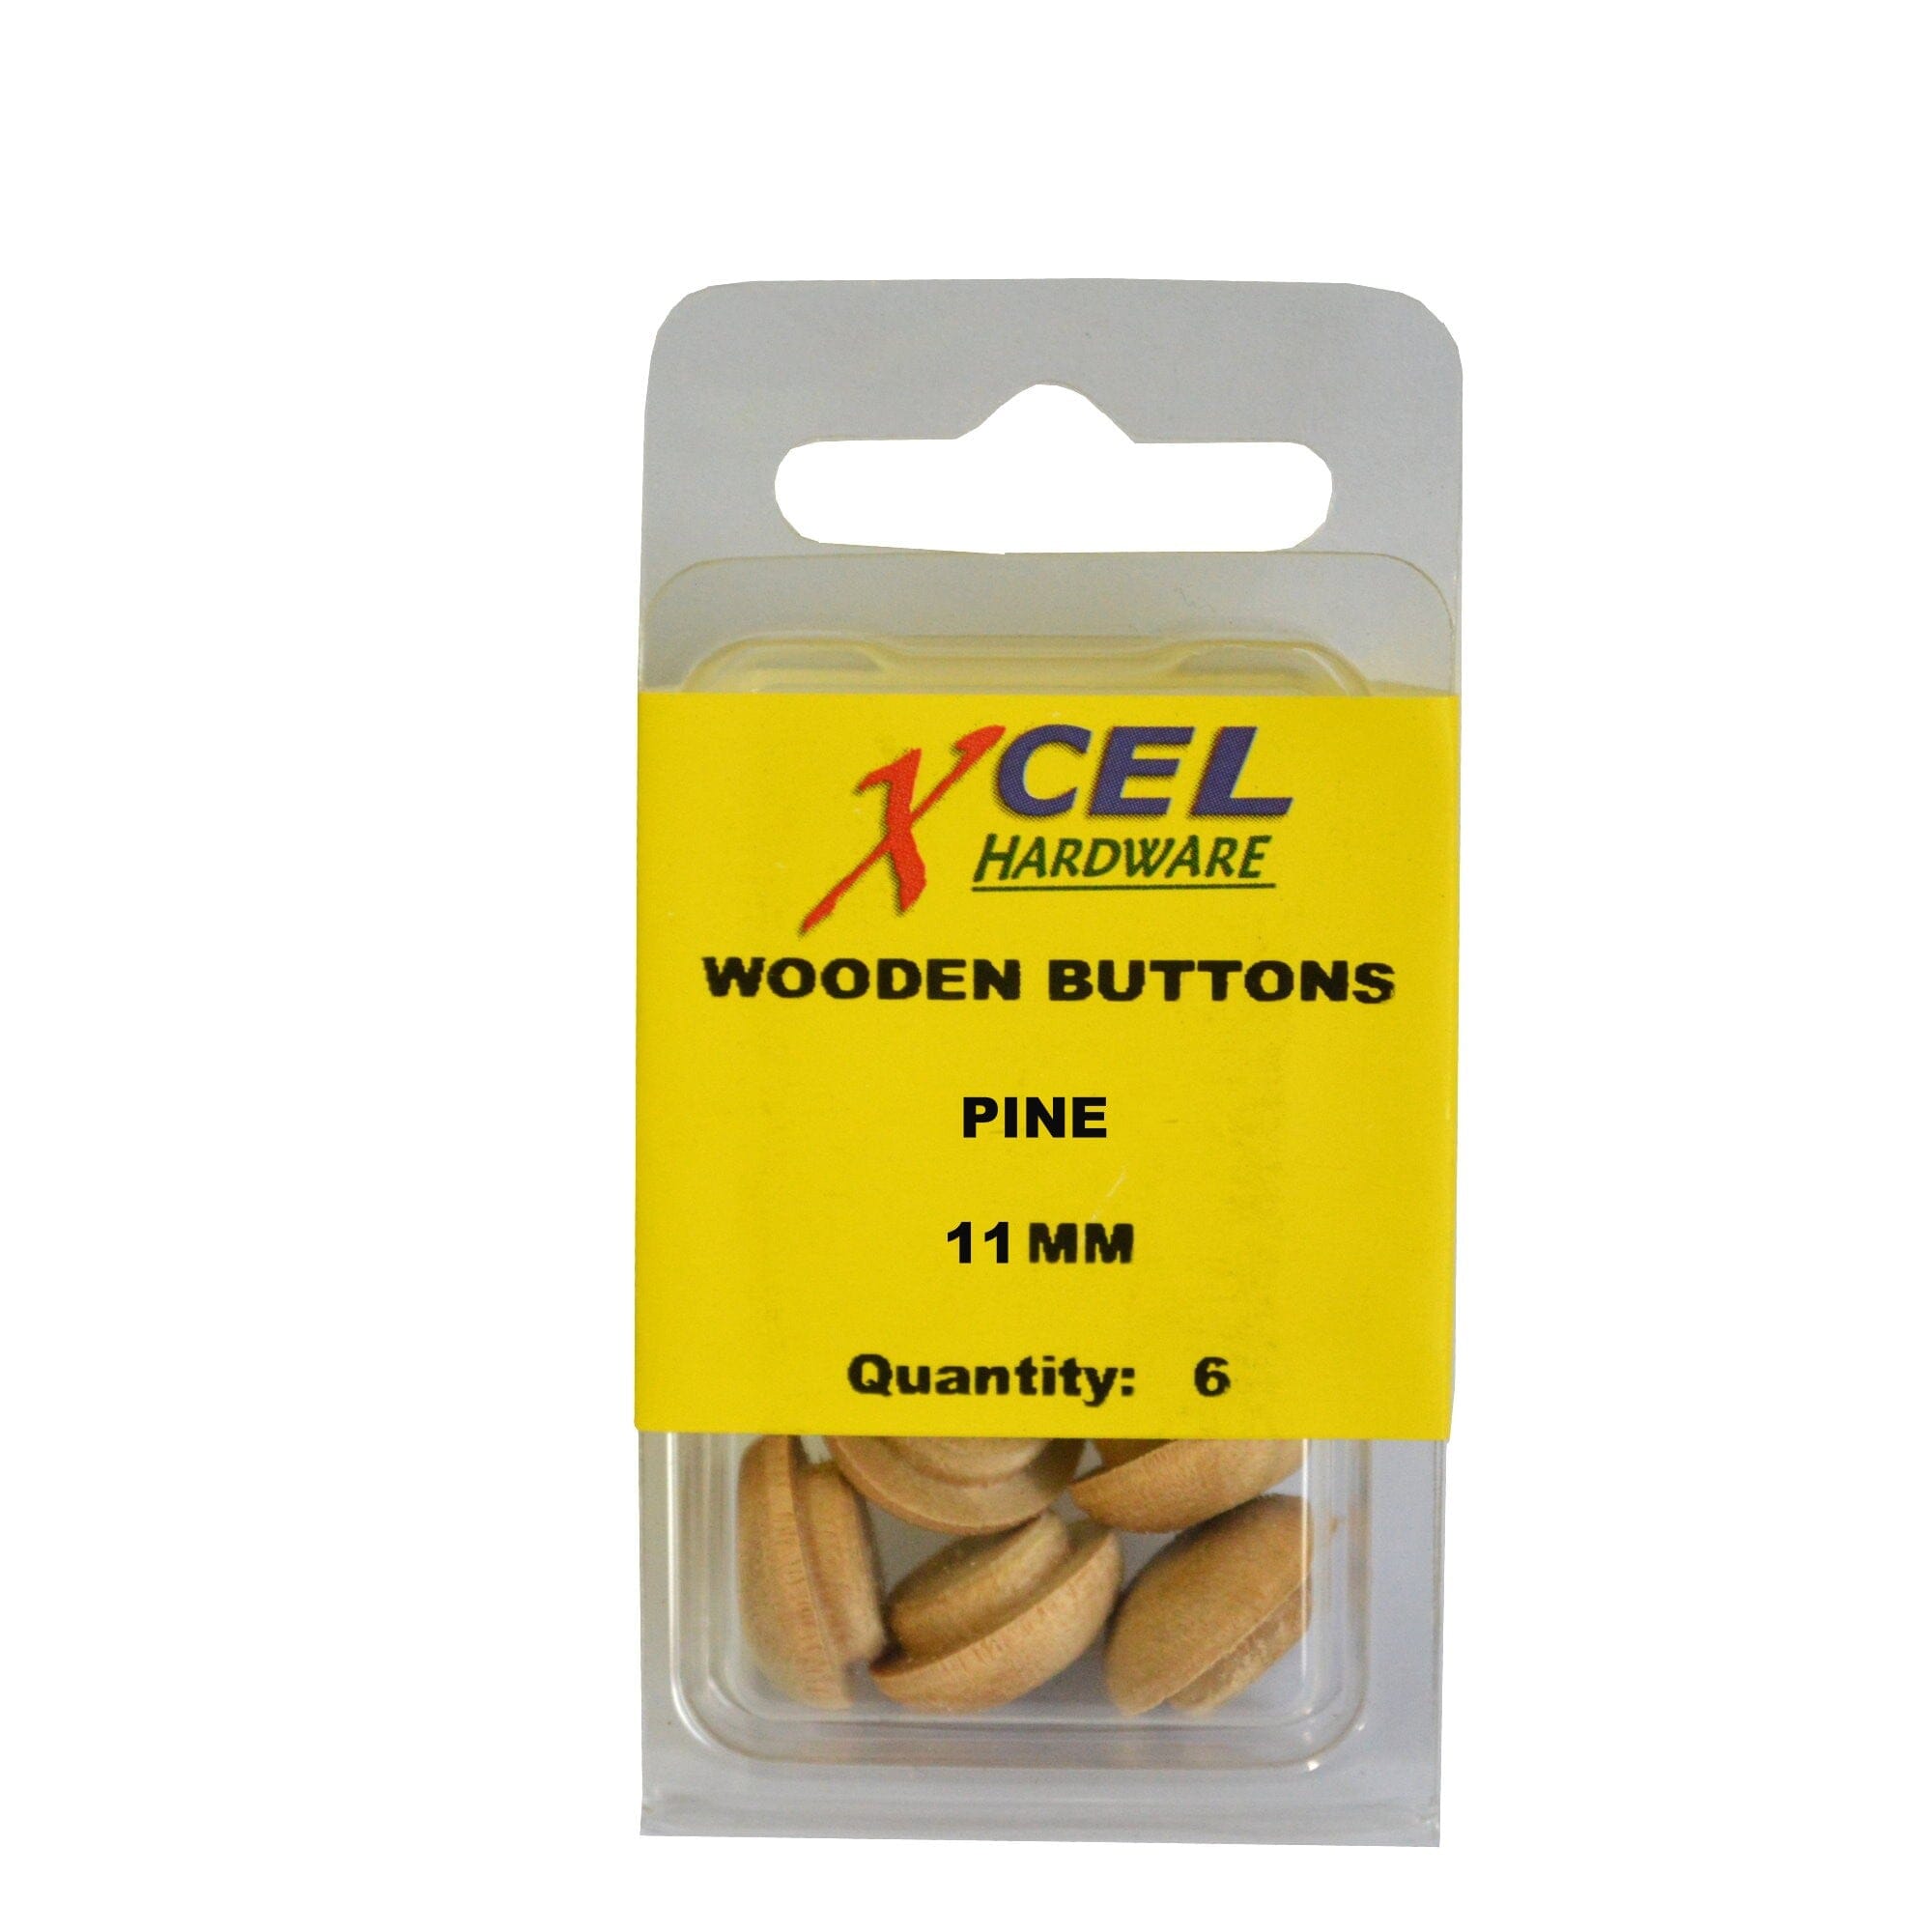 Xcel Wooden Pin Buttons - Pine 6-pce 11mm